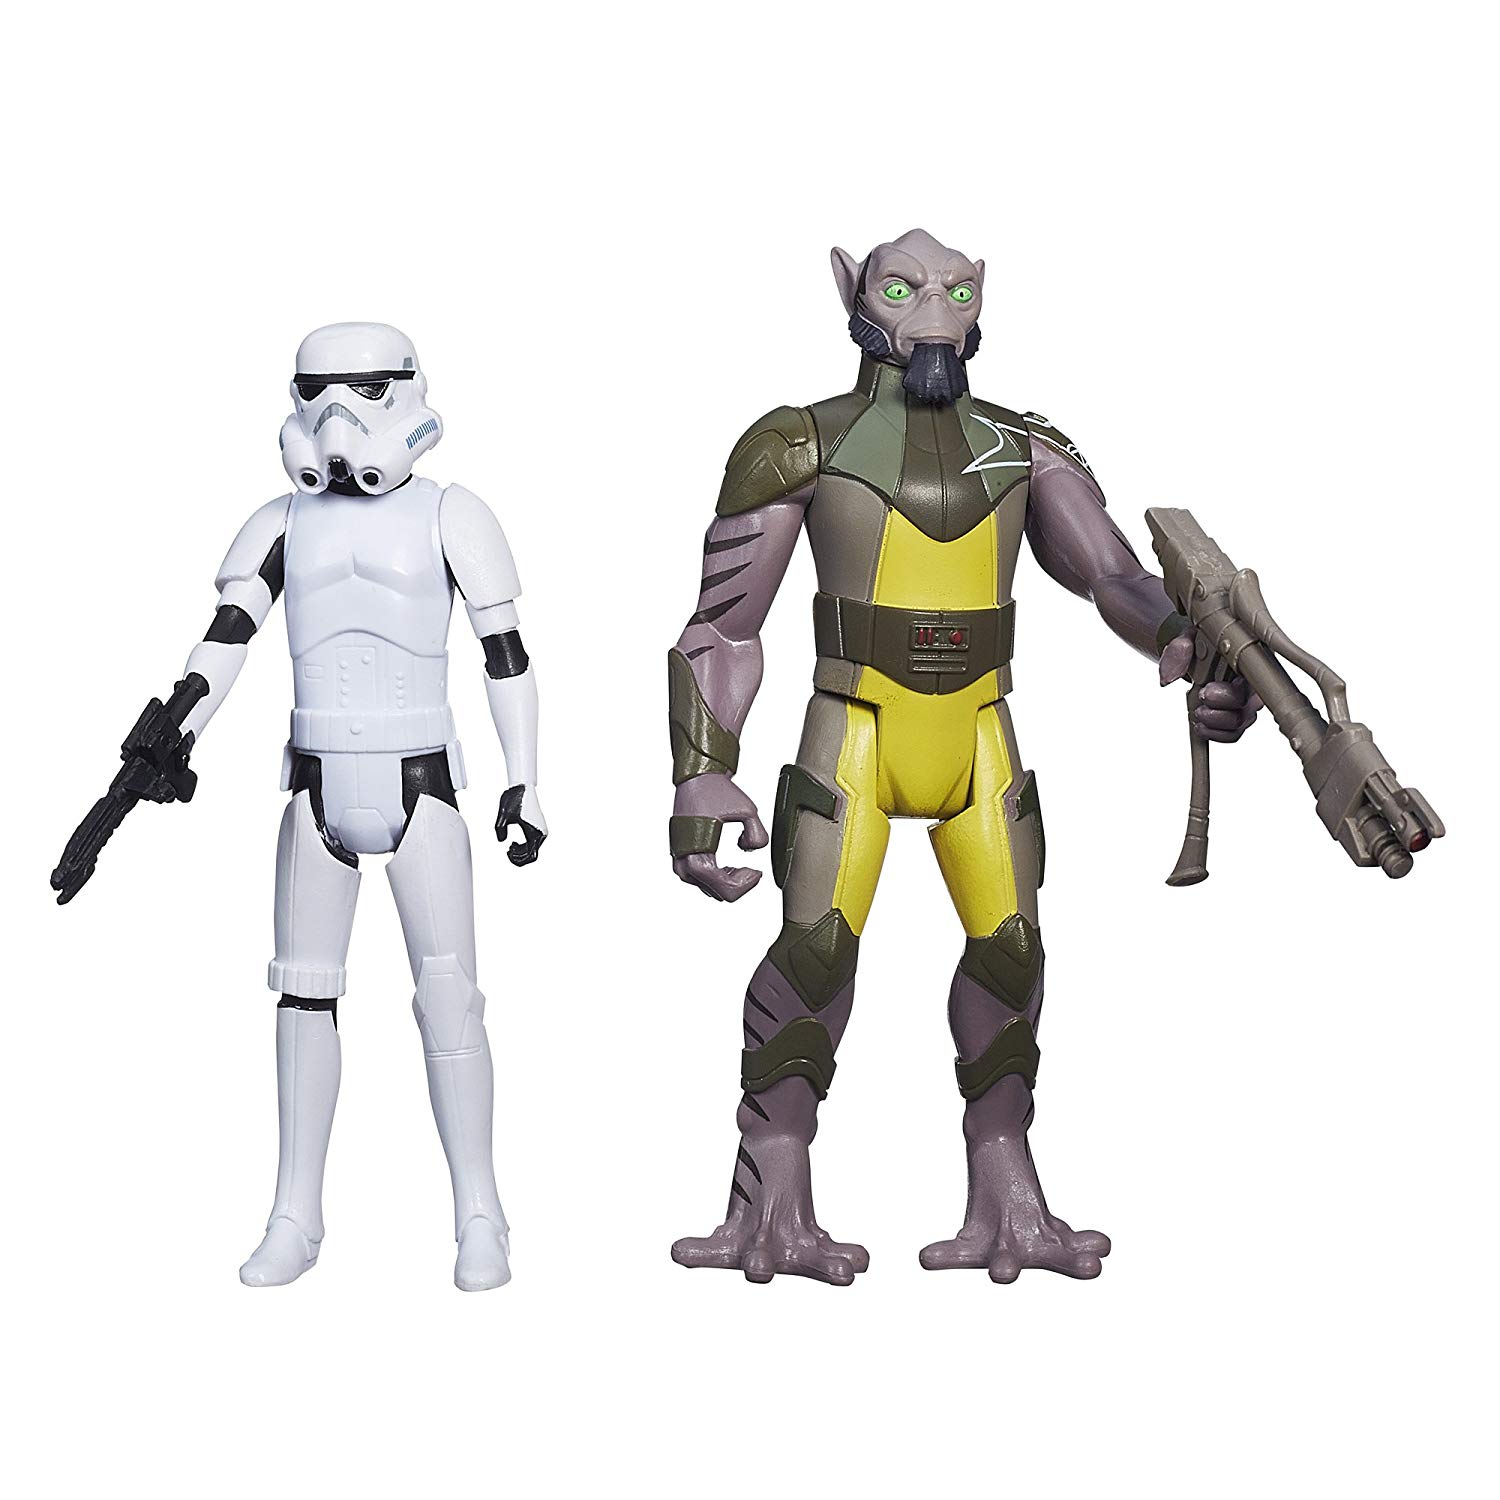 Steve Blum recommends Star Wars Zeb/Stormtrooper Figures